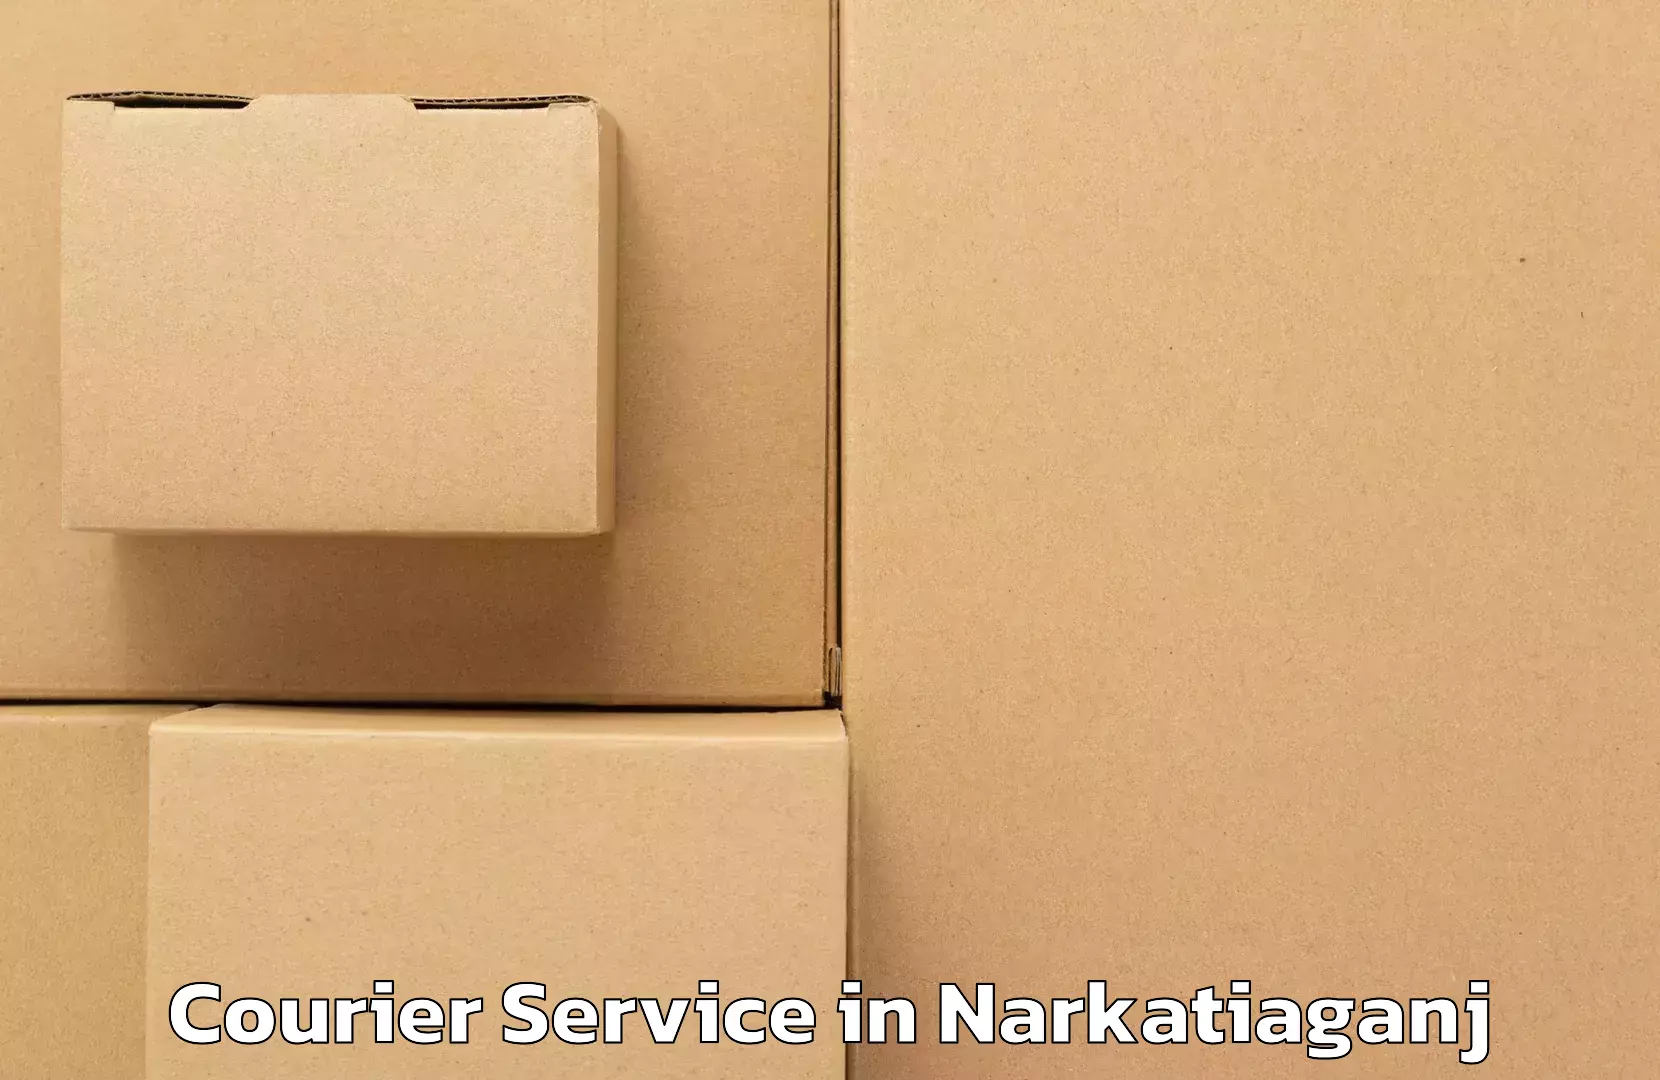 Customer-centric shipping in Narkatiaganj